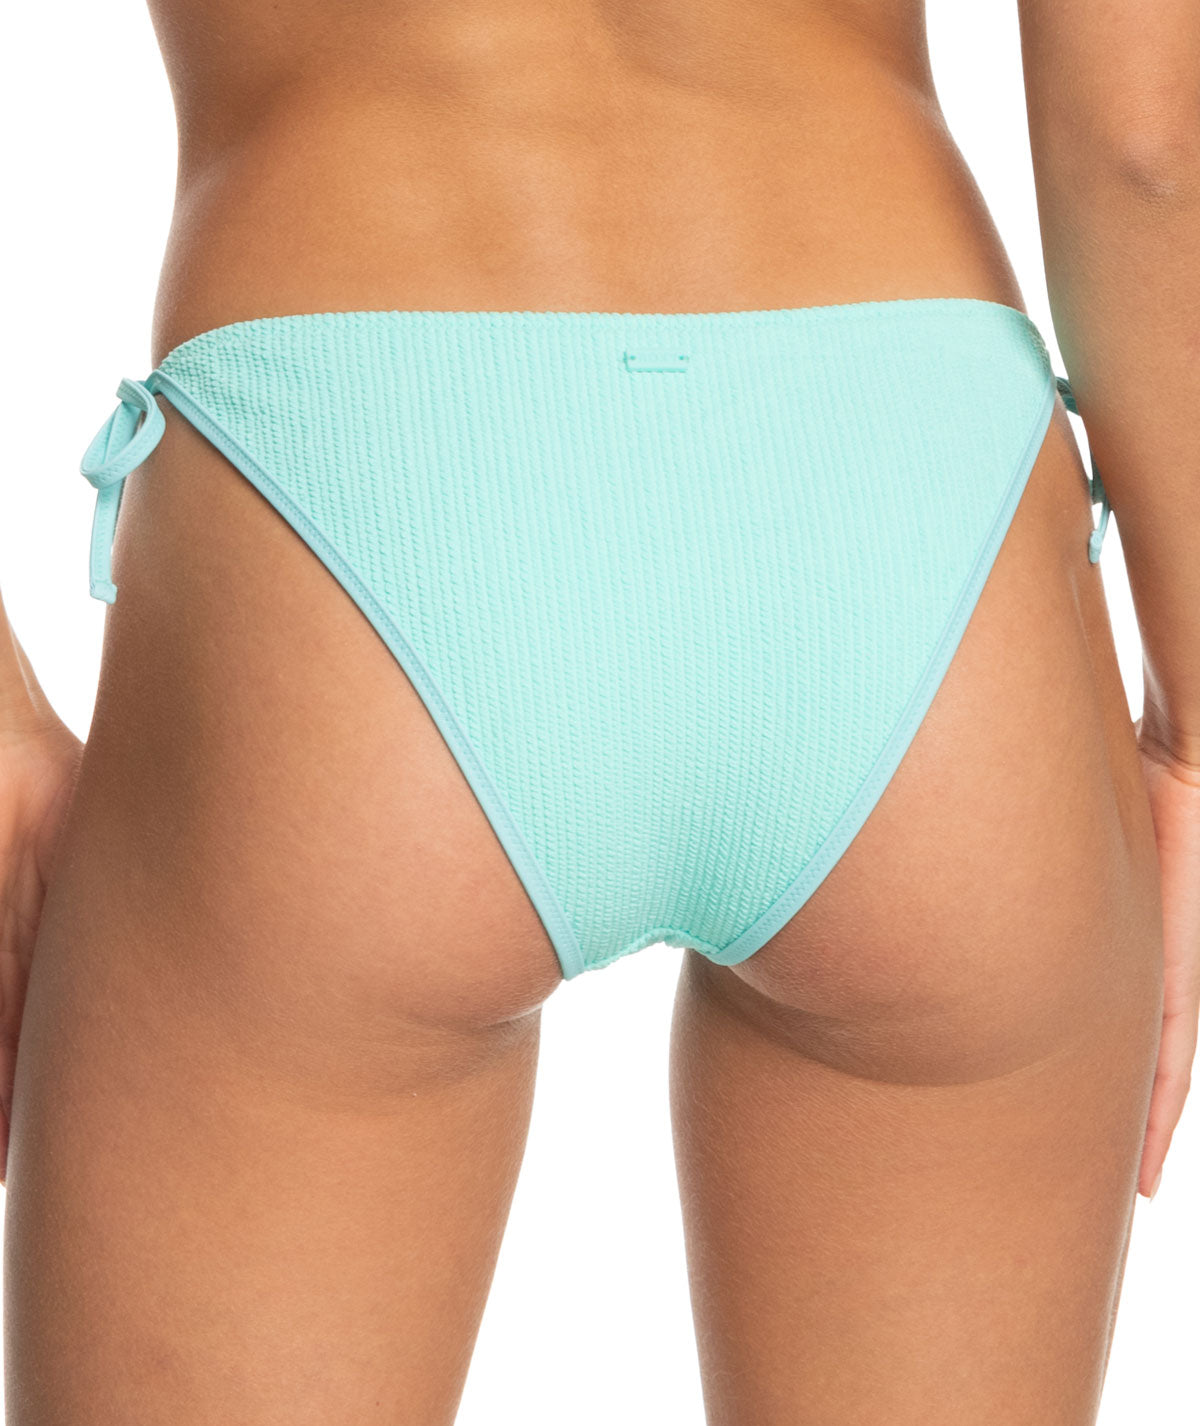 Roxy: Aruba Tie Side Moderagte Bikini Bottom